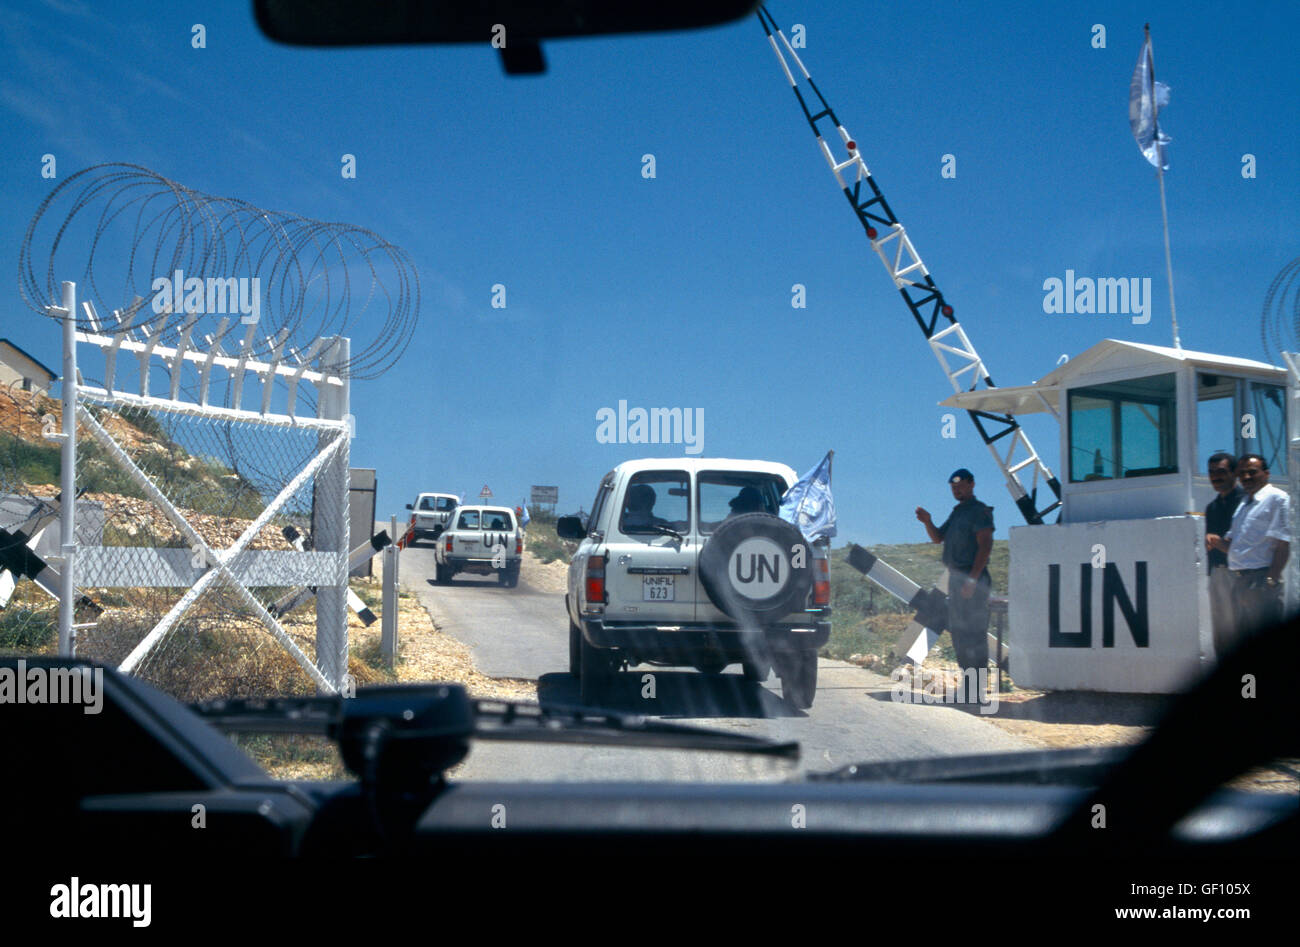 Ebel Es Saqi South lebanon Un Peace Keeping Force Gate & Red Cross Vehicles Stock Photo